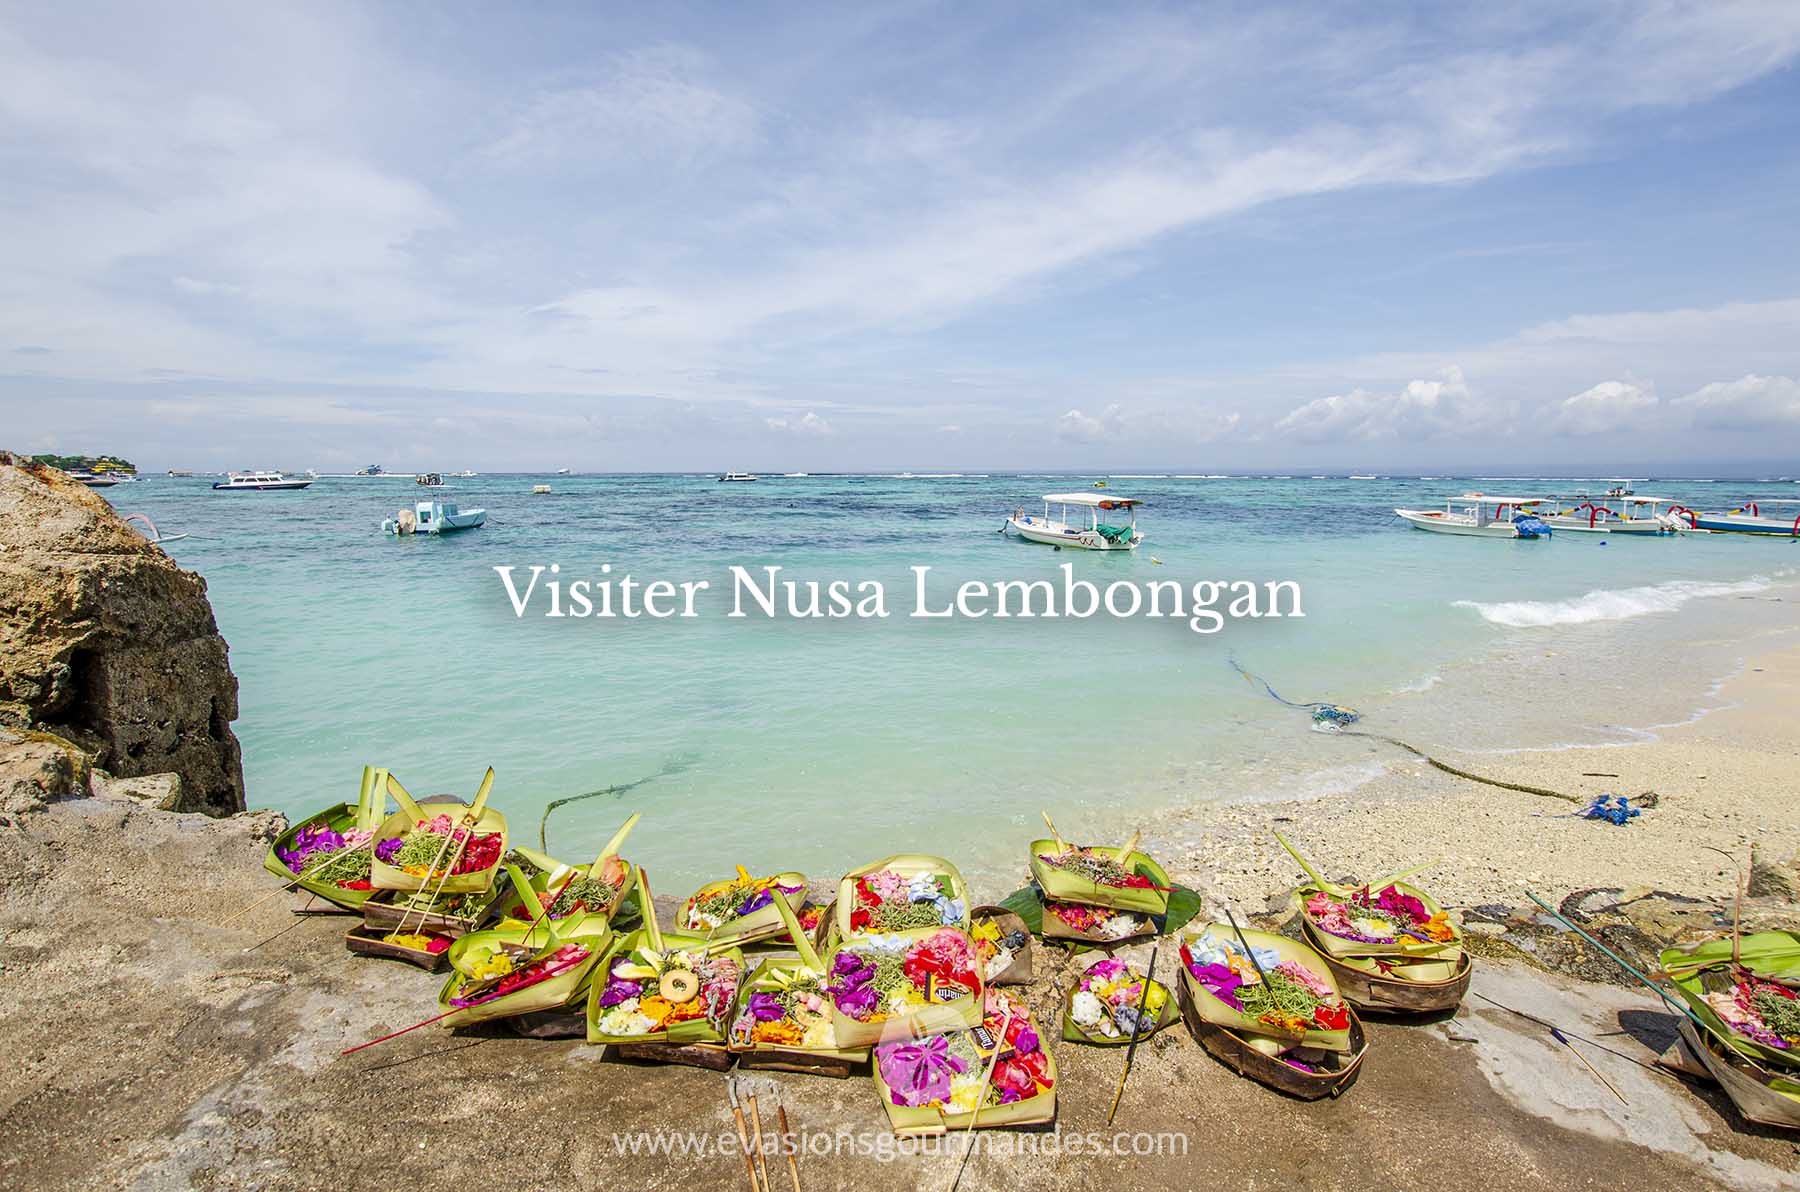 Visiter Nusa Lembongan